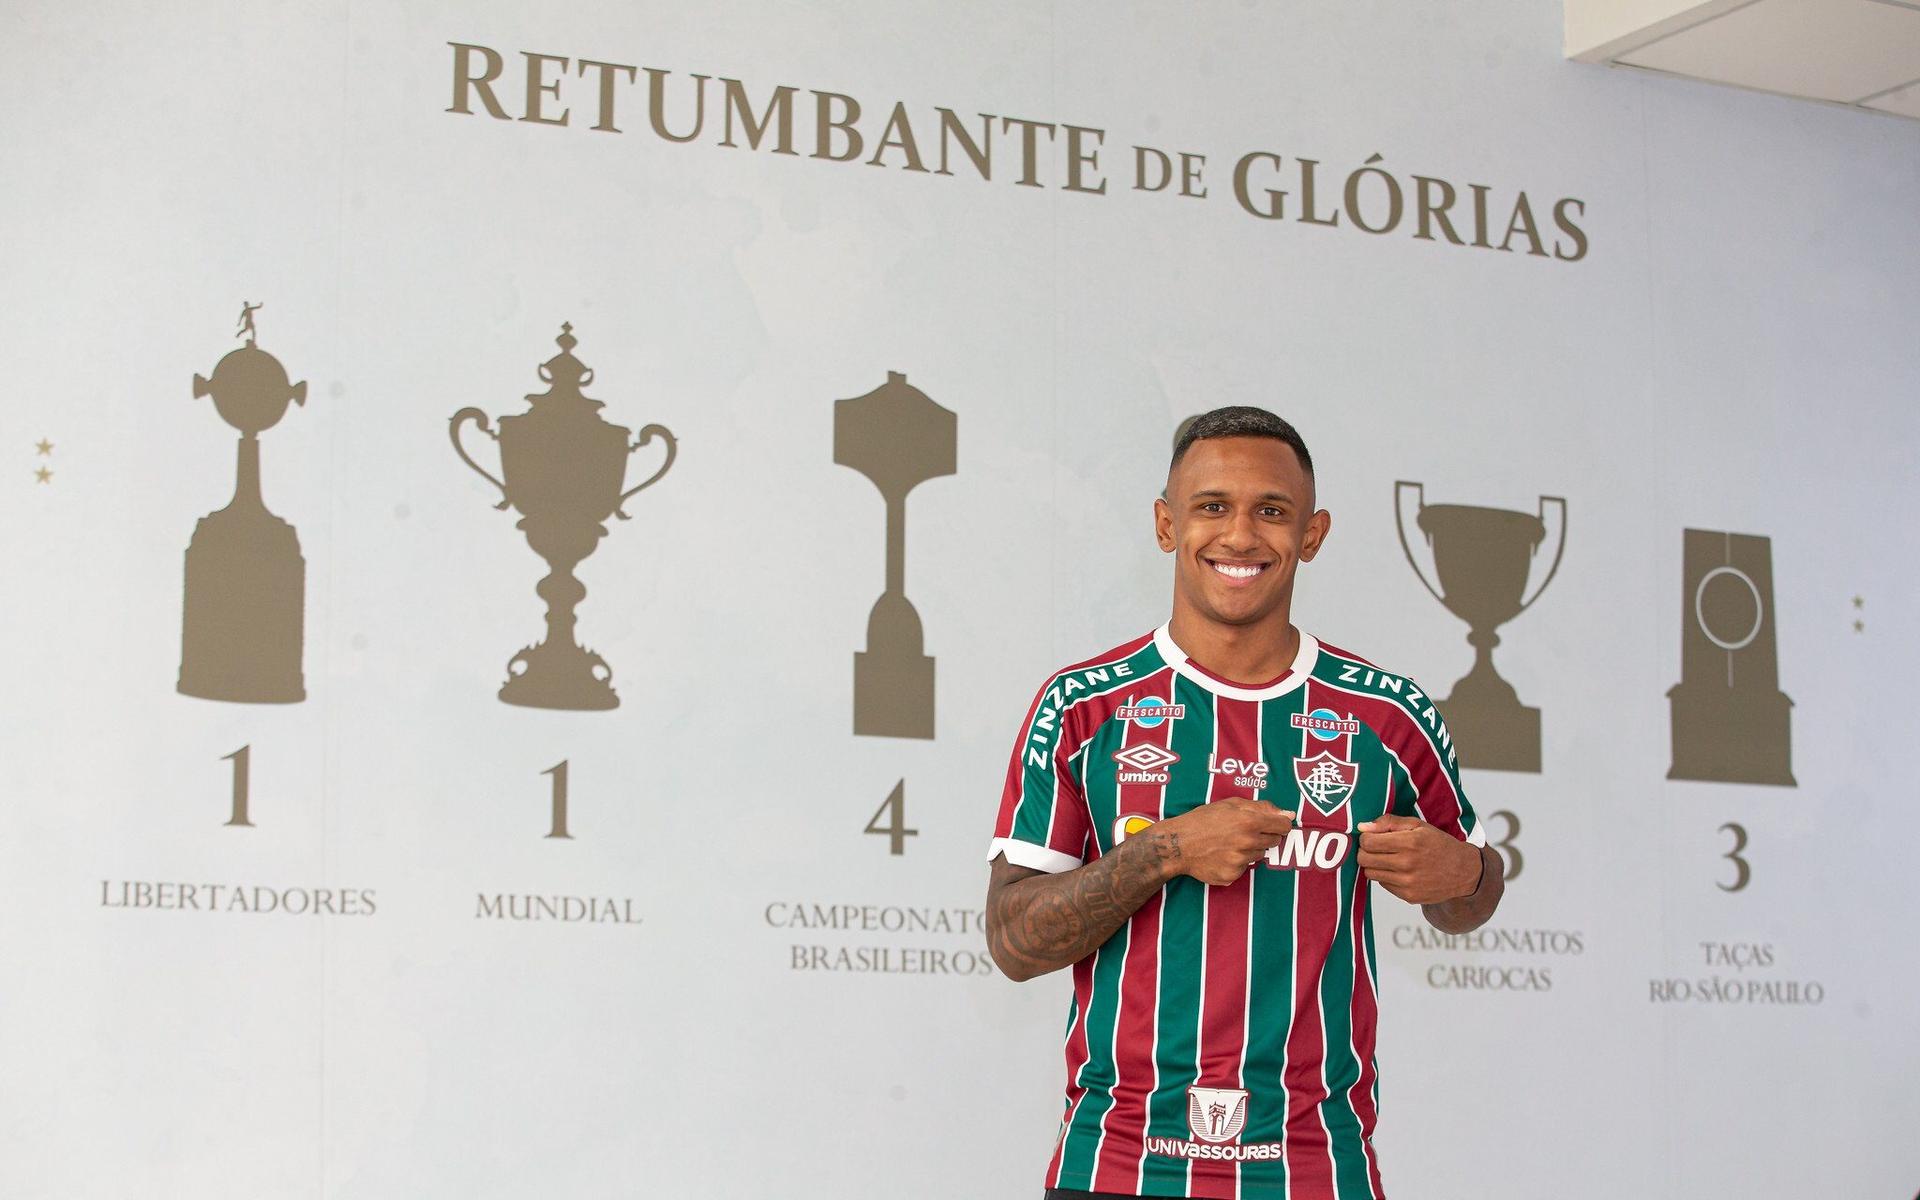 Marquinhos-Fluminense-aspect-ratio-512-320